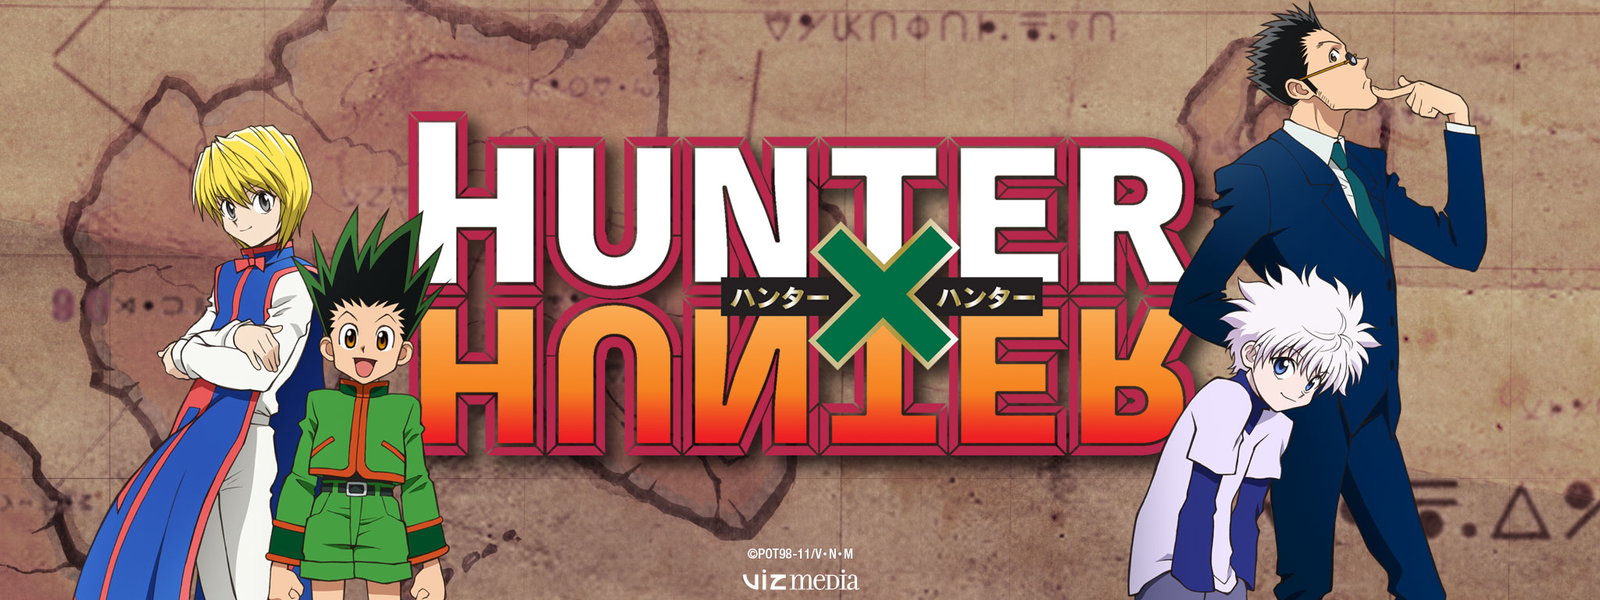 (Andamento) Hunter x Hunter 2011 18620?size=1600x600&region=US